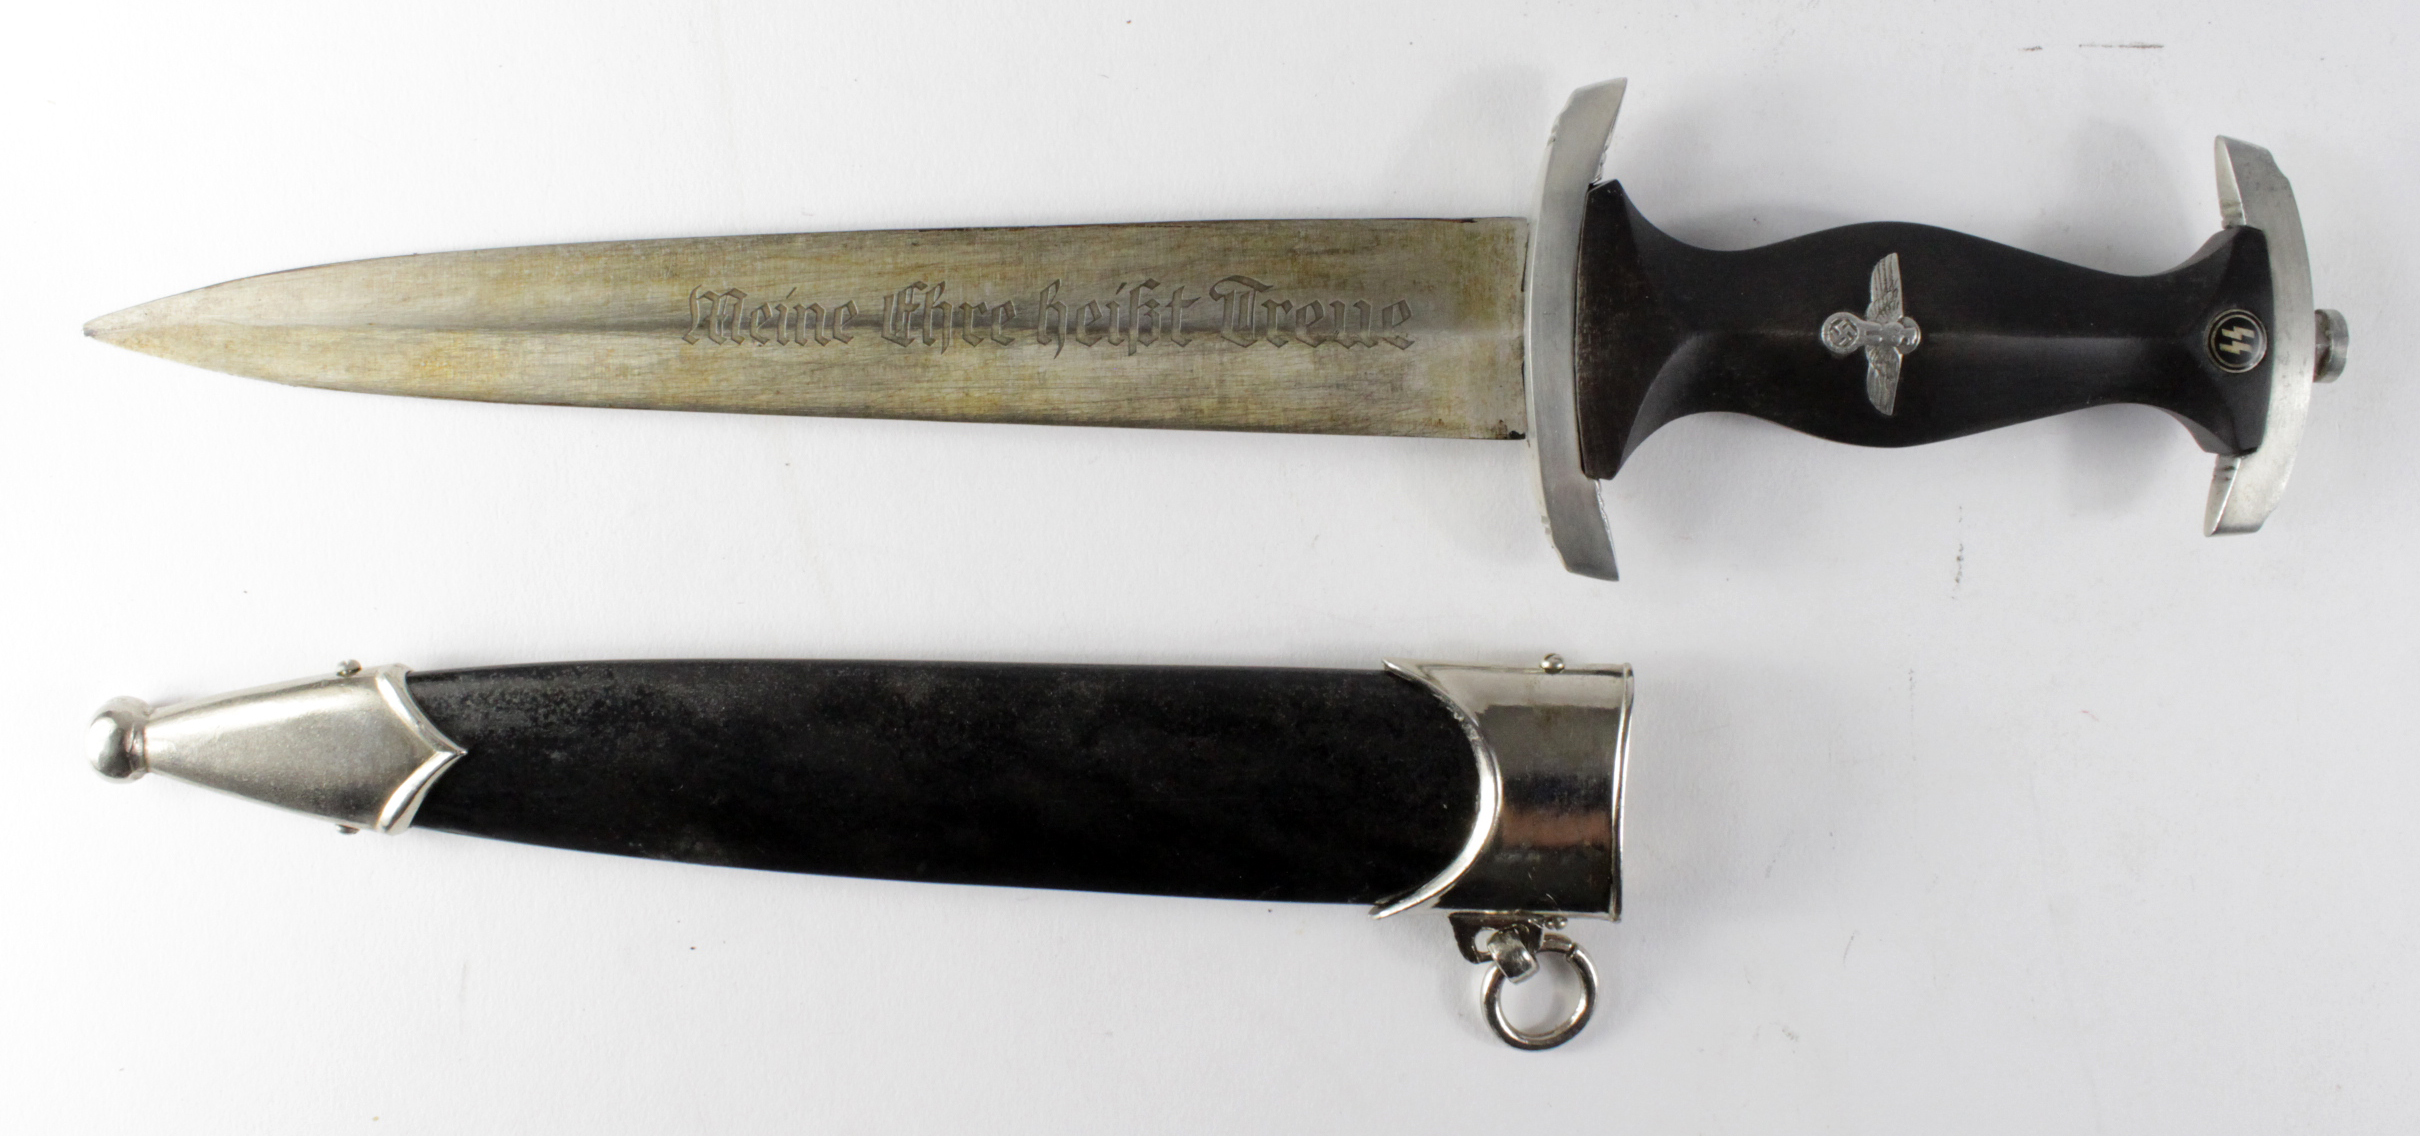 German SS Dagger, Meine Ehre Heist Treue blade, RZM marked, 1053 / 38 and a 1 stamped on cross